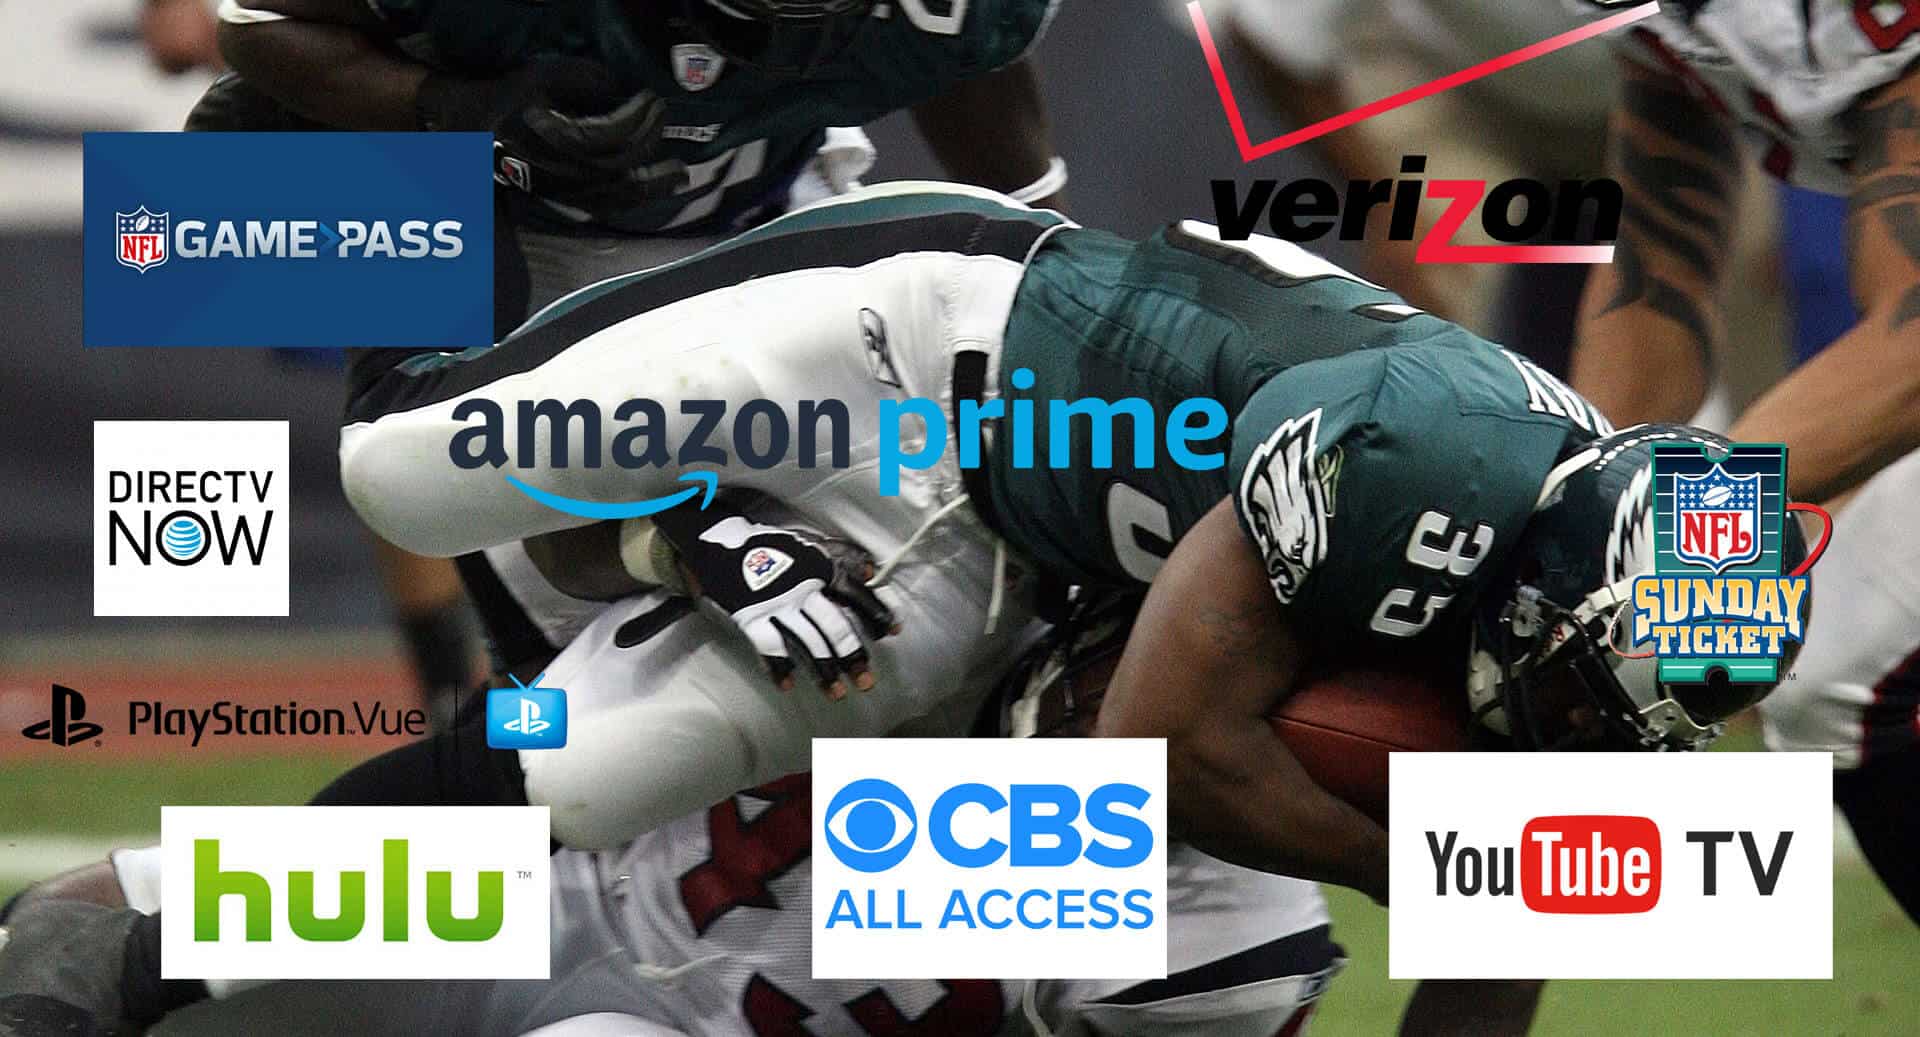 Complete guide to stream NFL games live in 2018 - TV, OTT, Kodi